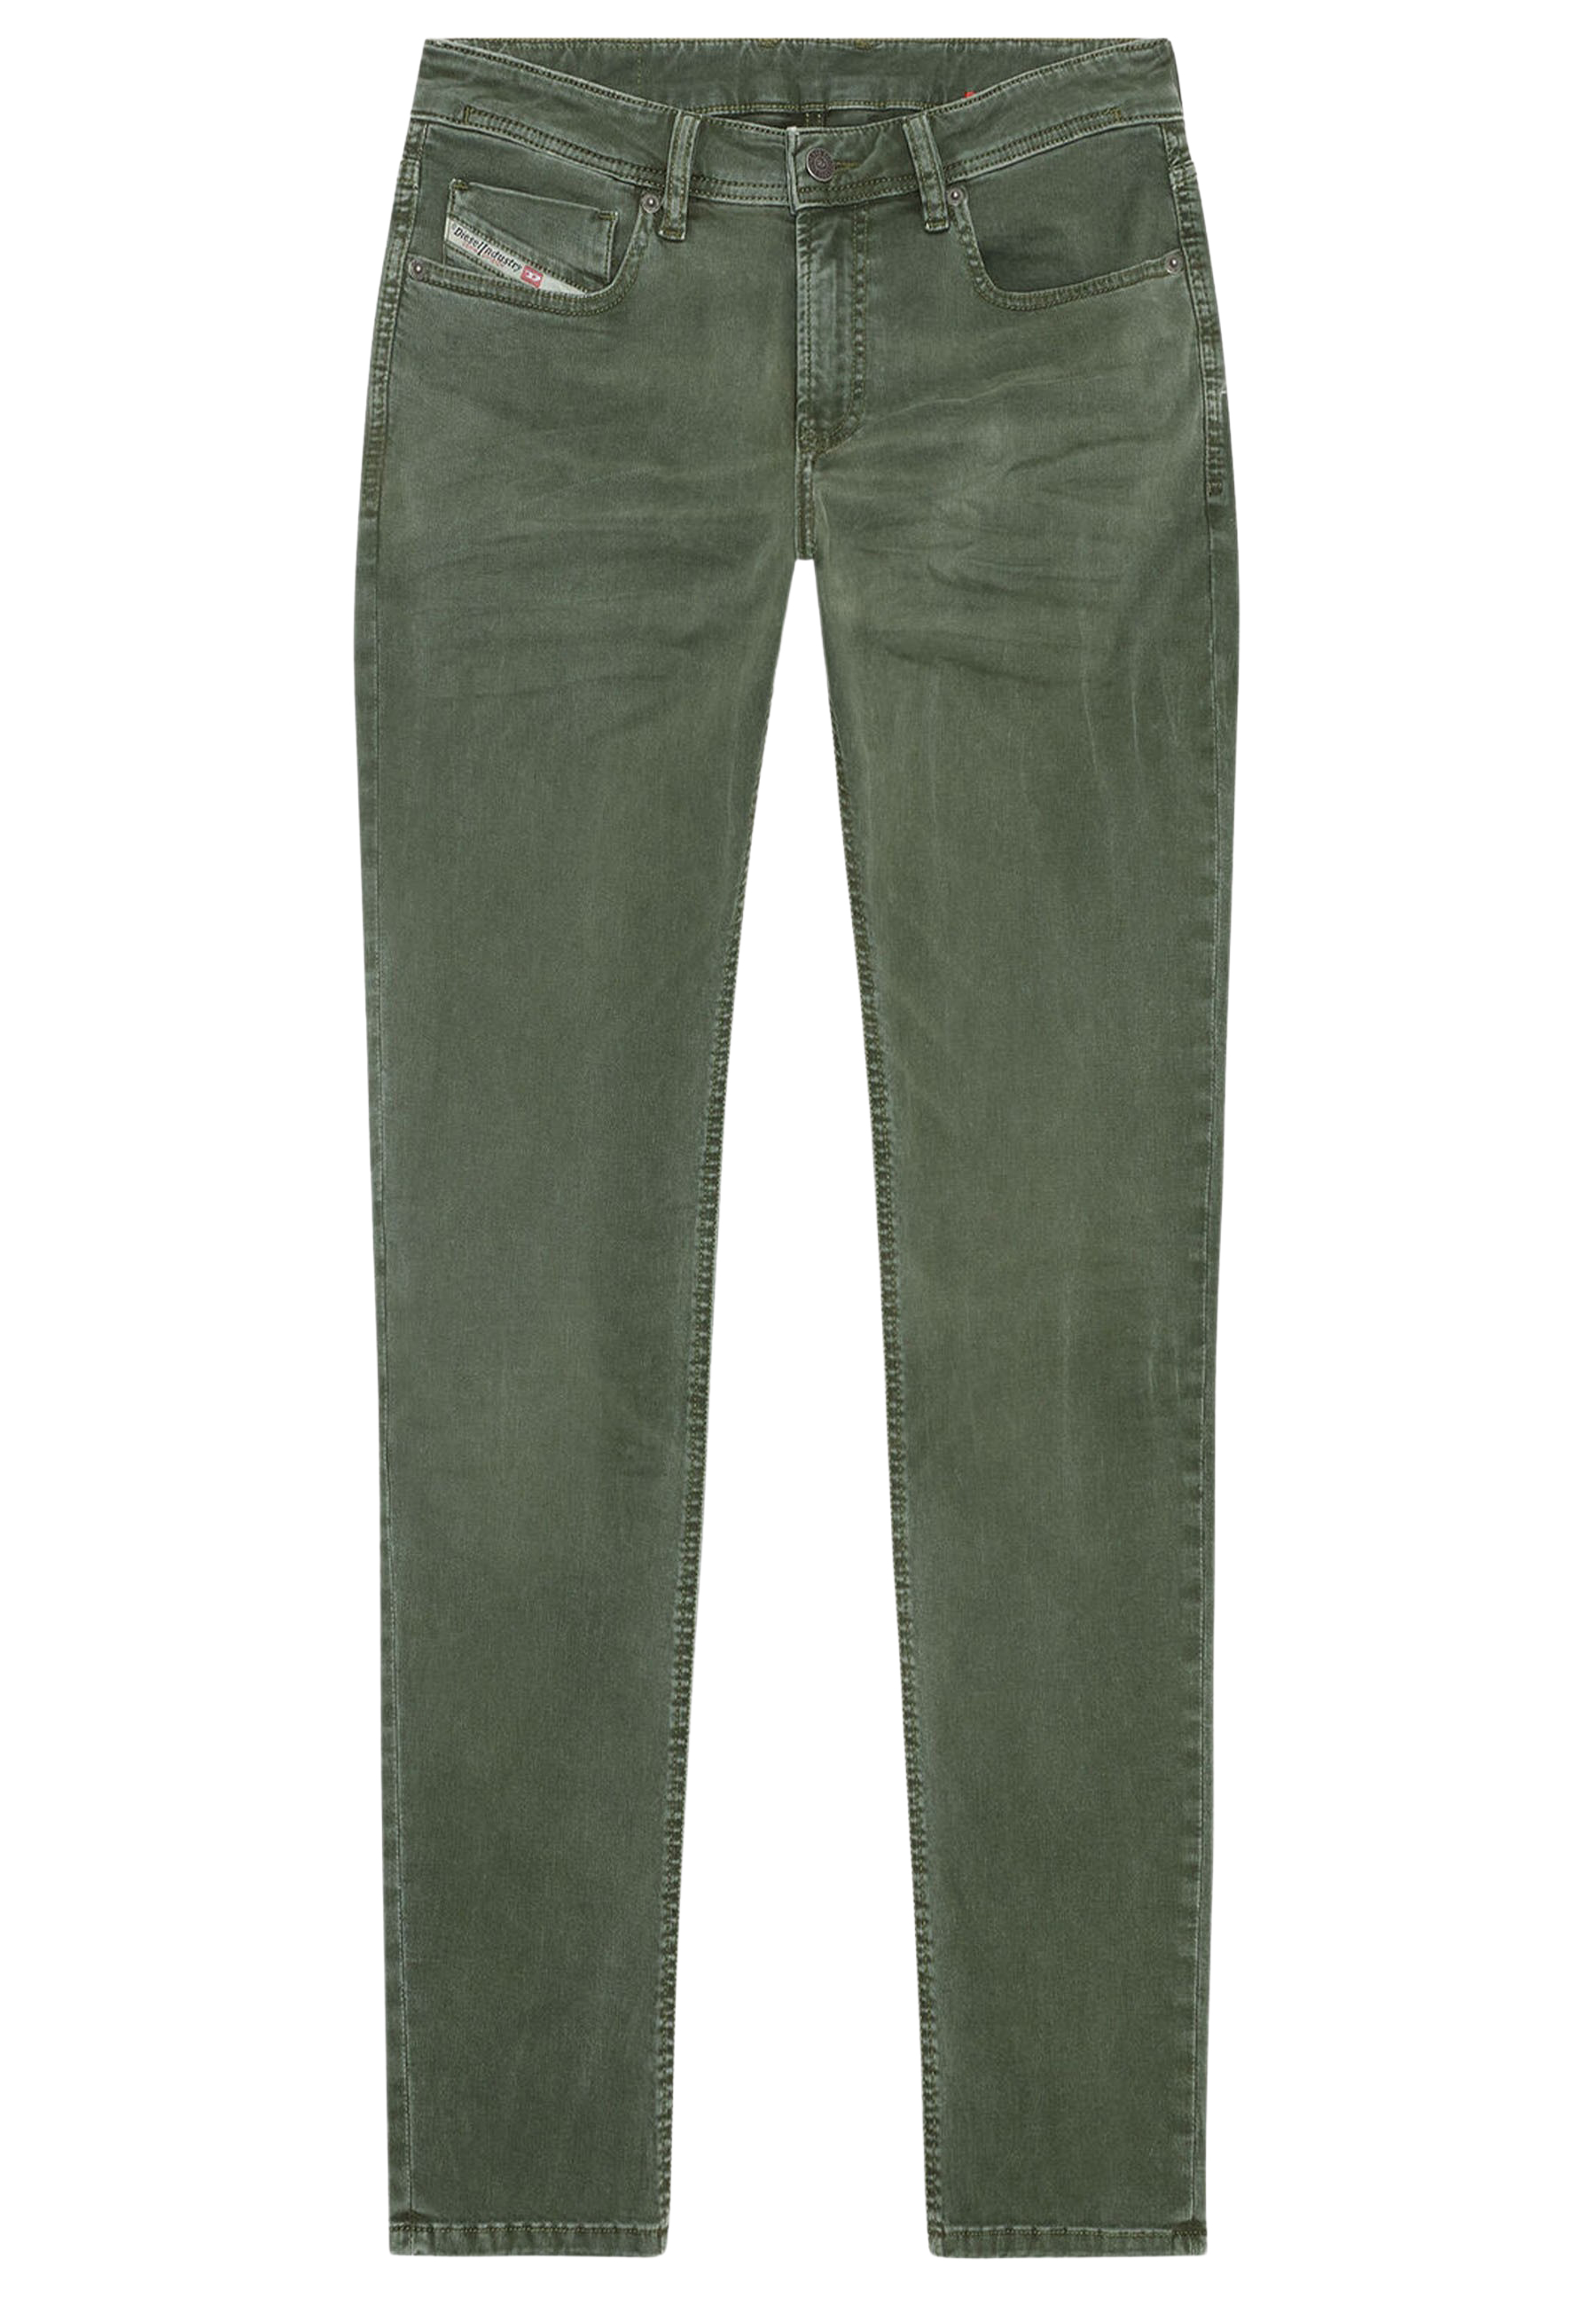 Diesel jeans groen Heren maat 33/32